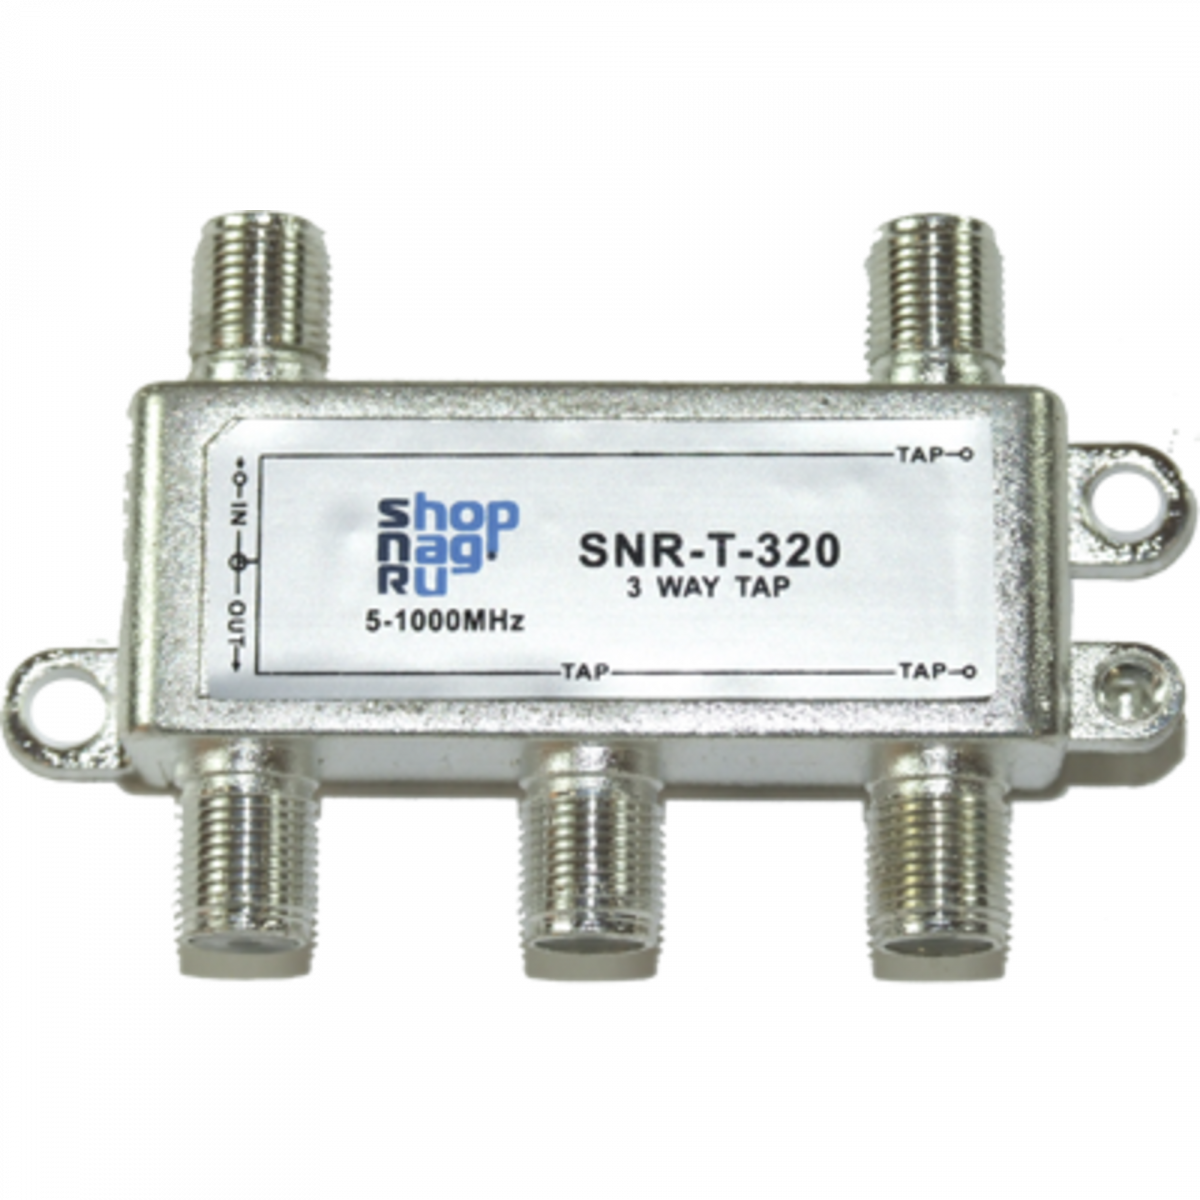 Ответвитель абонентский SNR-T-326 на 3 отвода, вносимое затухание IN-TAP 26dB.